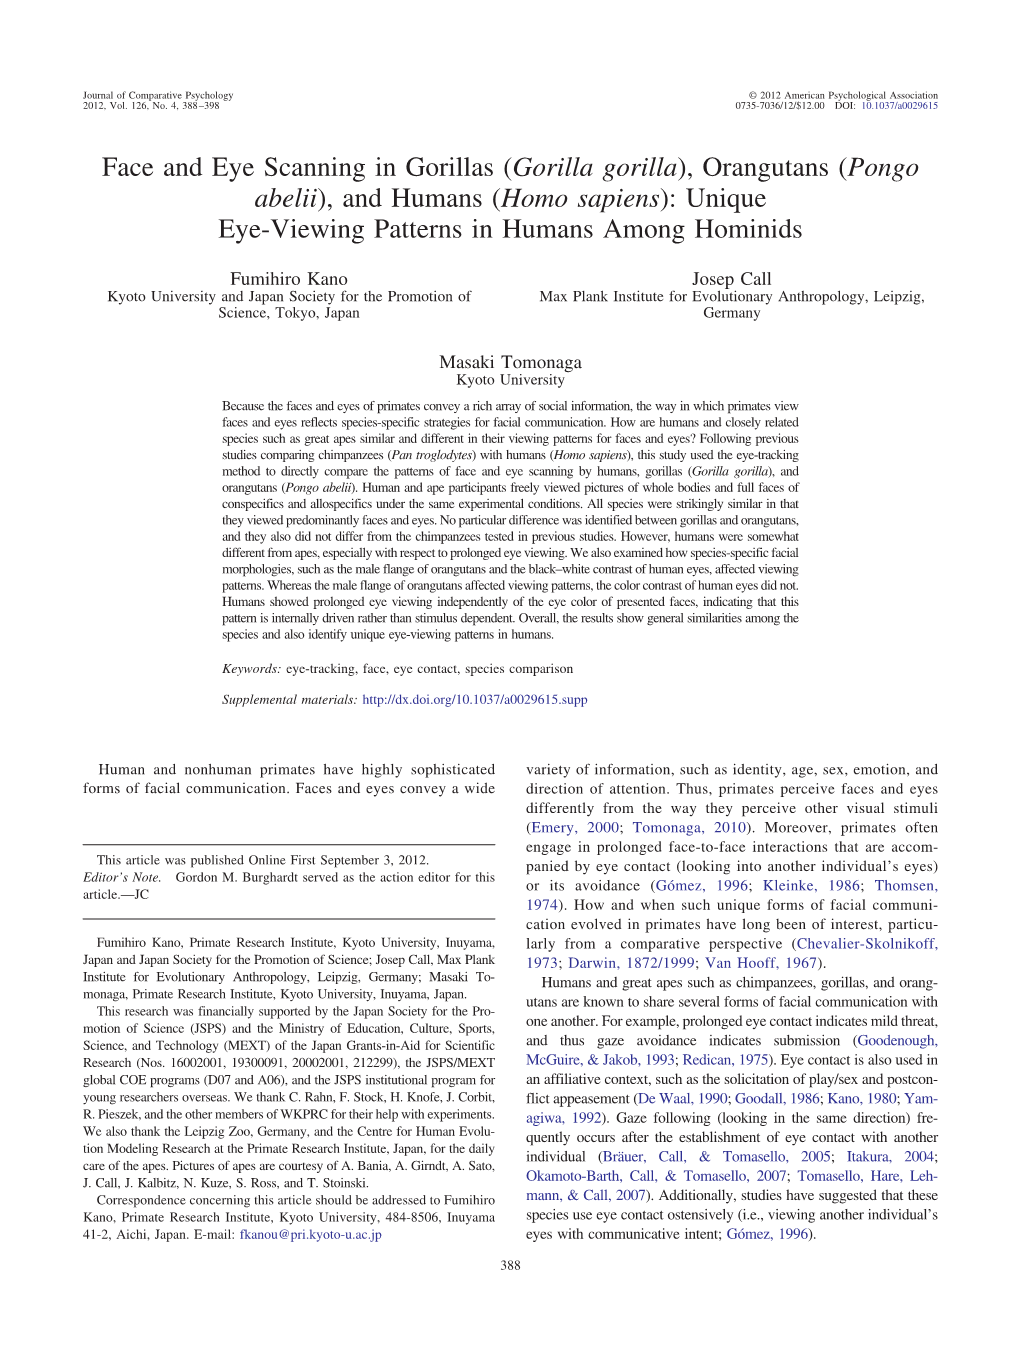 Face and Eye Scanning in Gorillas (Gorilla Gorilla), Orangutans (Pongo Abelii), and Humans (Homo Sapiens): Unique Eye-Viewing Patterns in Humans Among Hominids